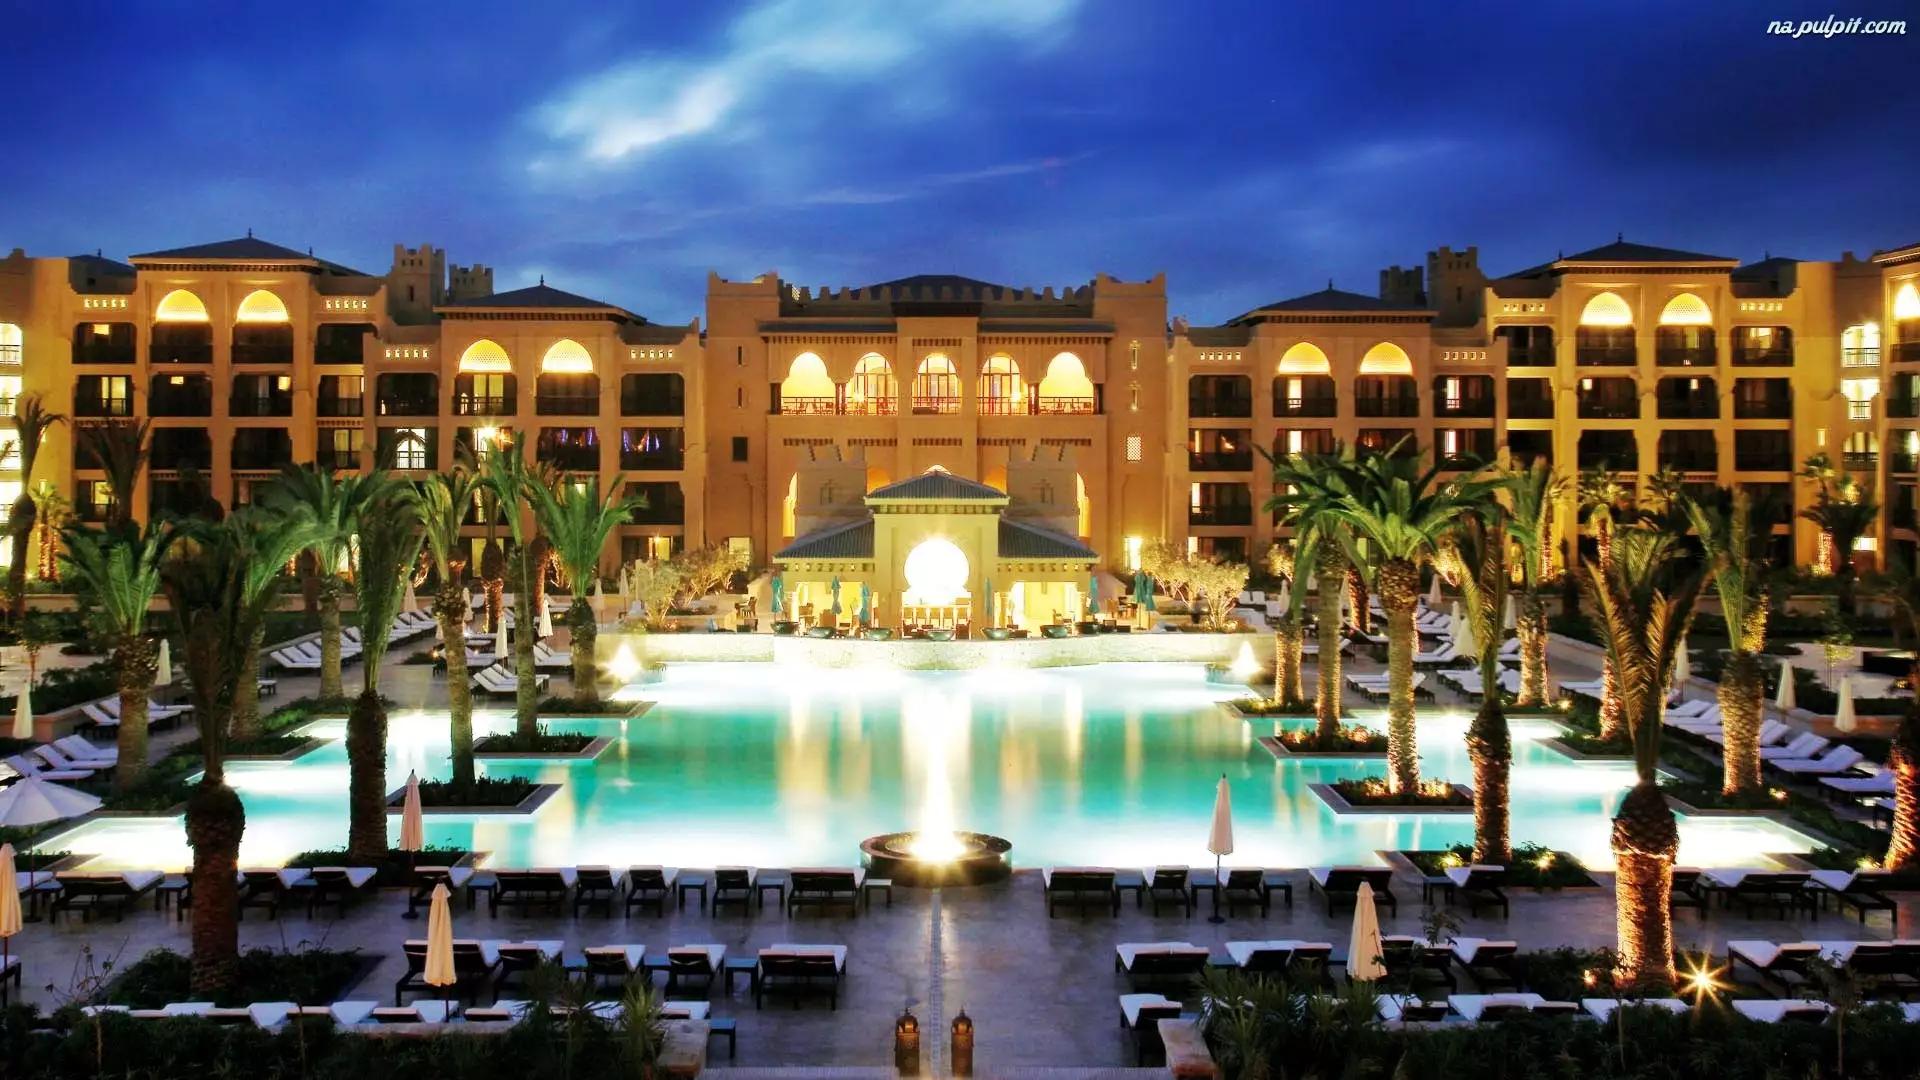 Hotel, Maroko, Basen, Mazagan